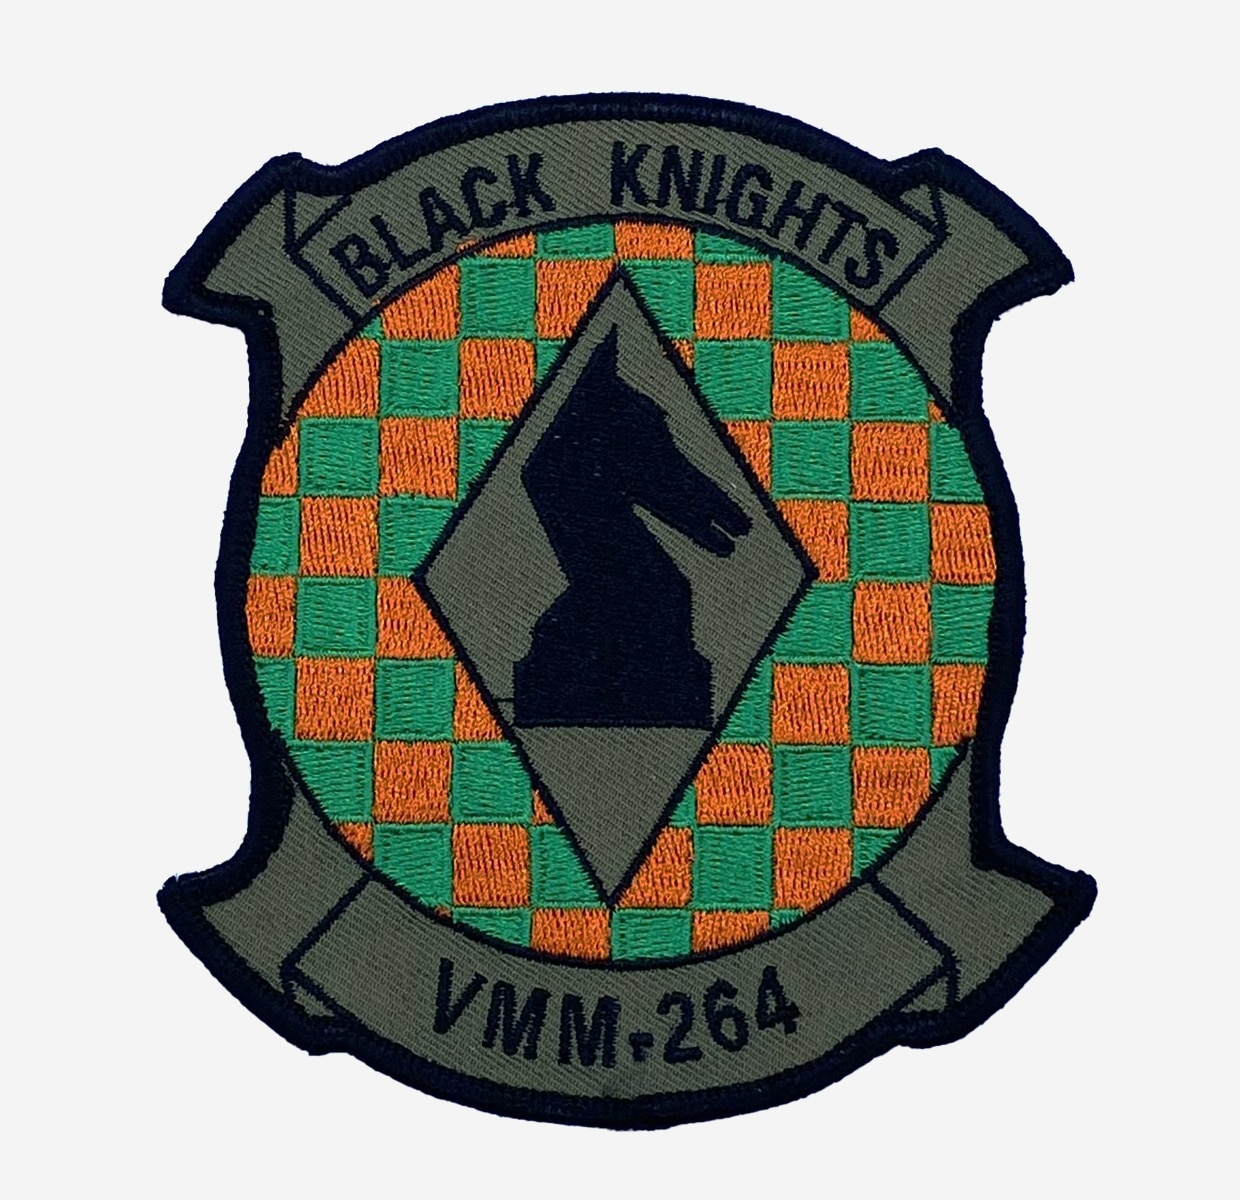 HMM-264 Black Knights (Green) Patch – Sew On 4.5"